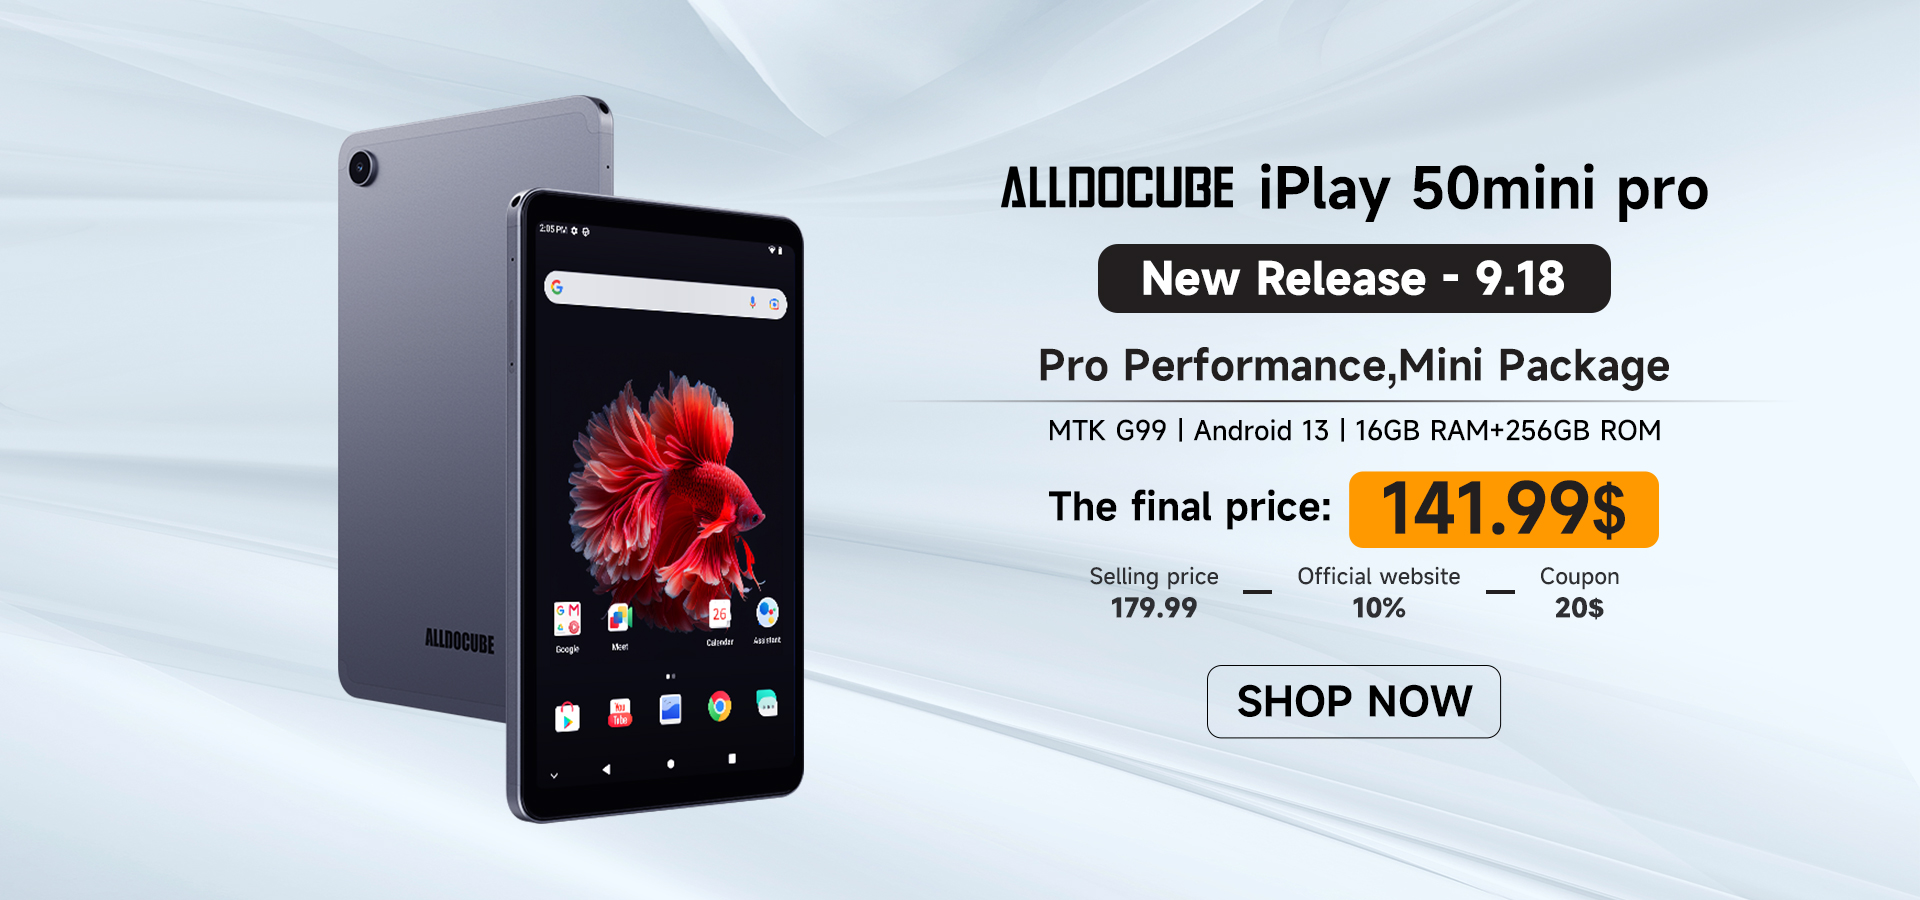 Breaking News: Alldocube iPlay 50 mini Pro Now Available in the 